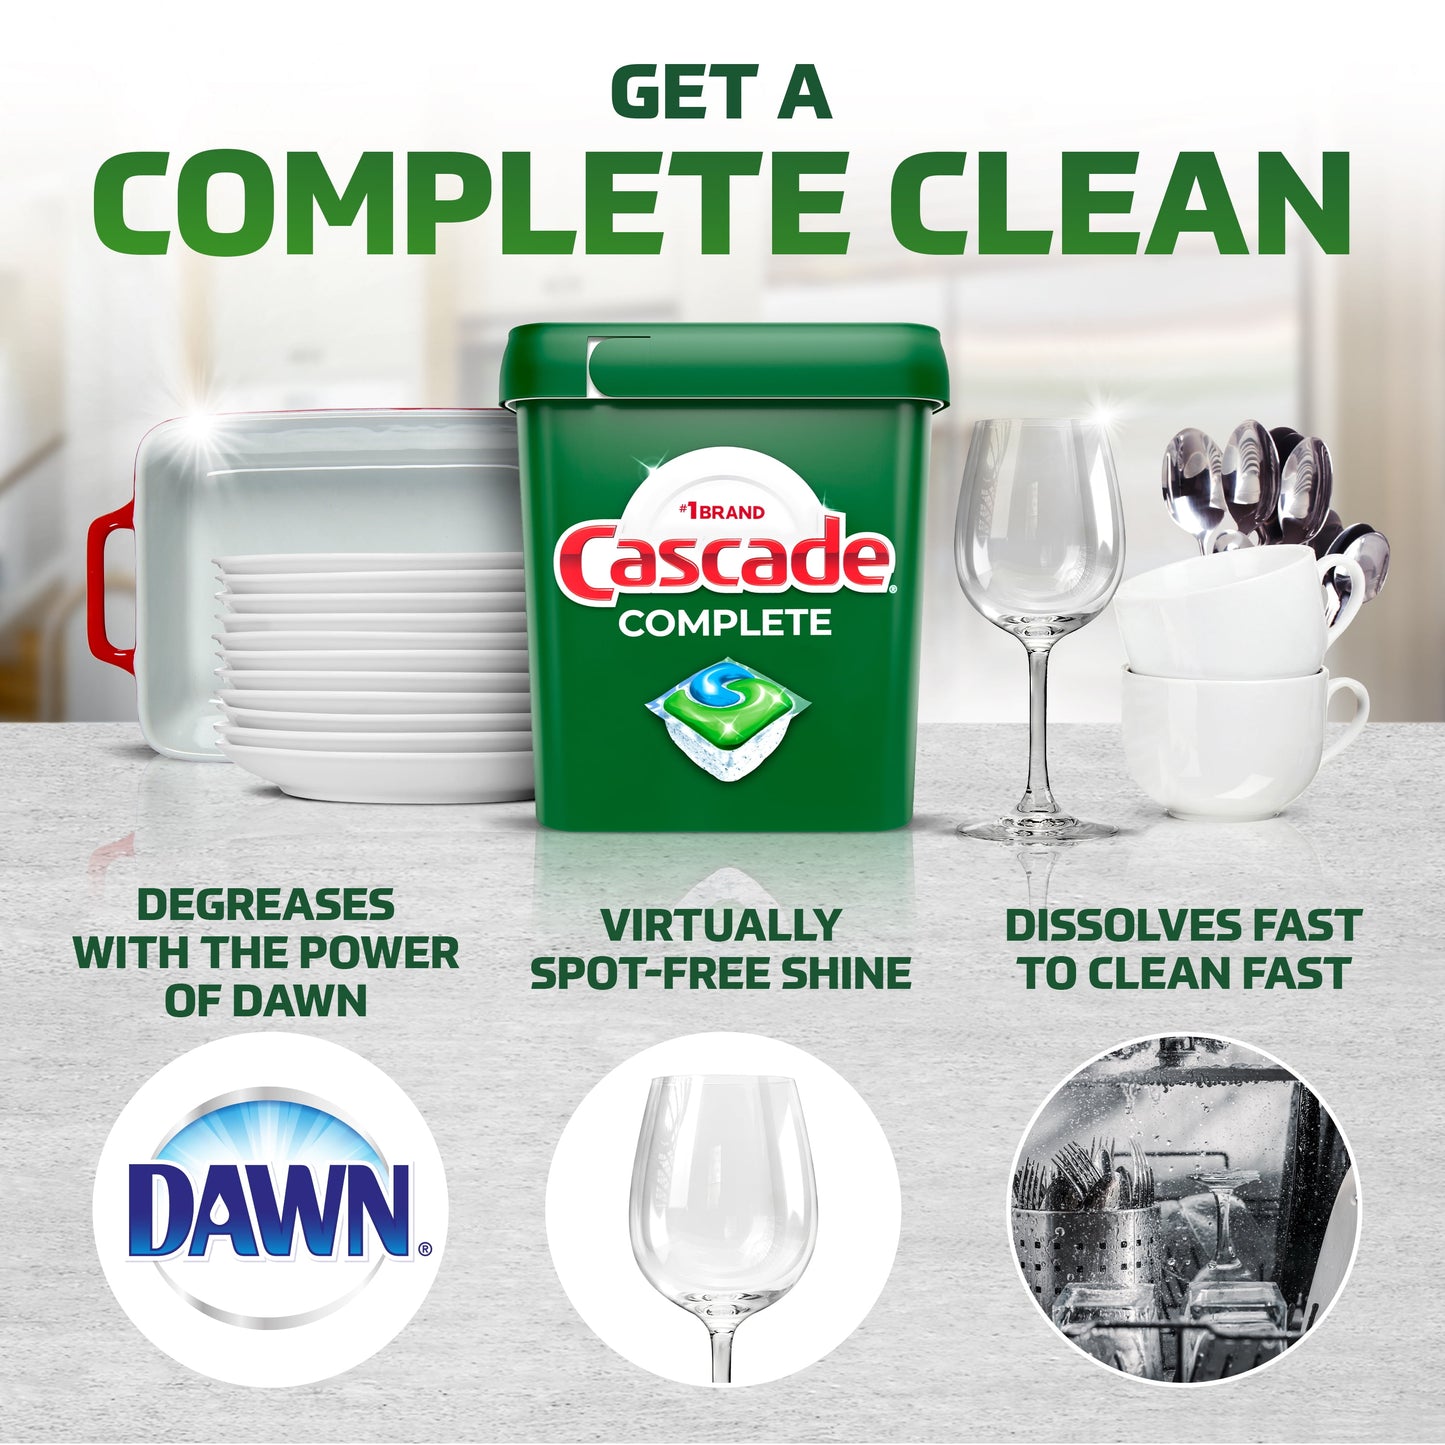 Cascade Complete ActionPacs, Dishwasher Detergent Pods, Fresh, 27 Count